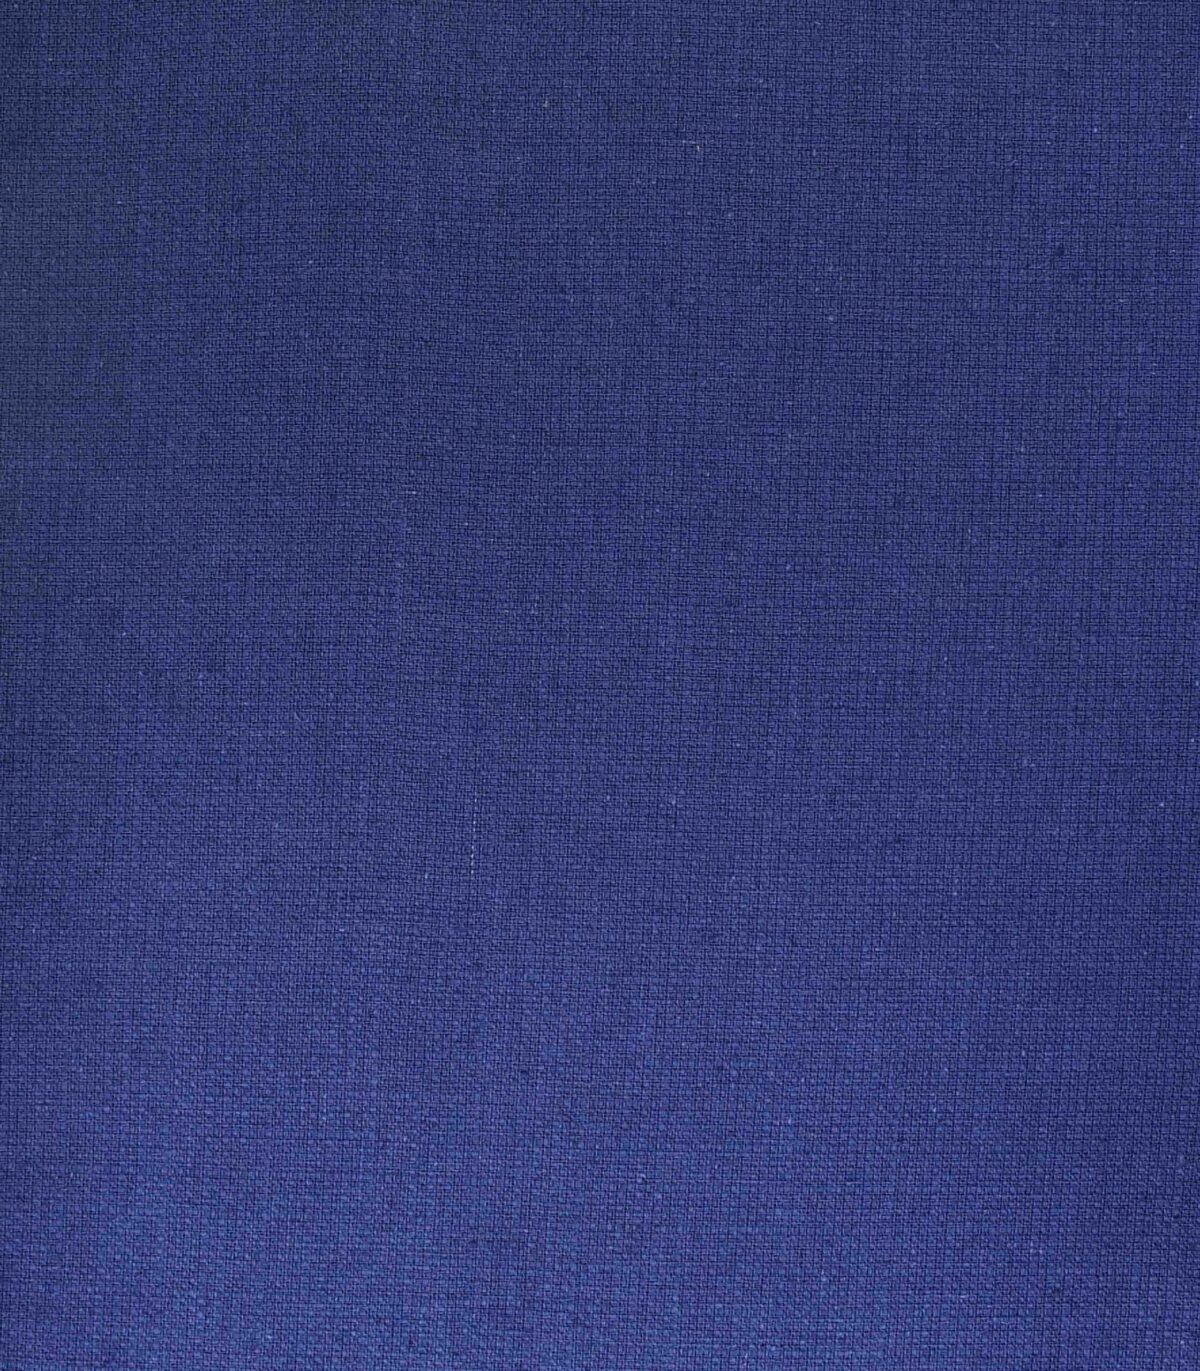 Blue Dyed Cotton & Flex Fabric